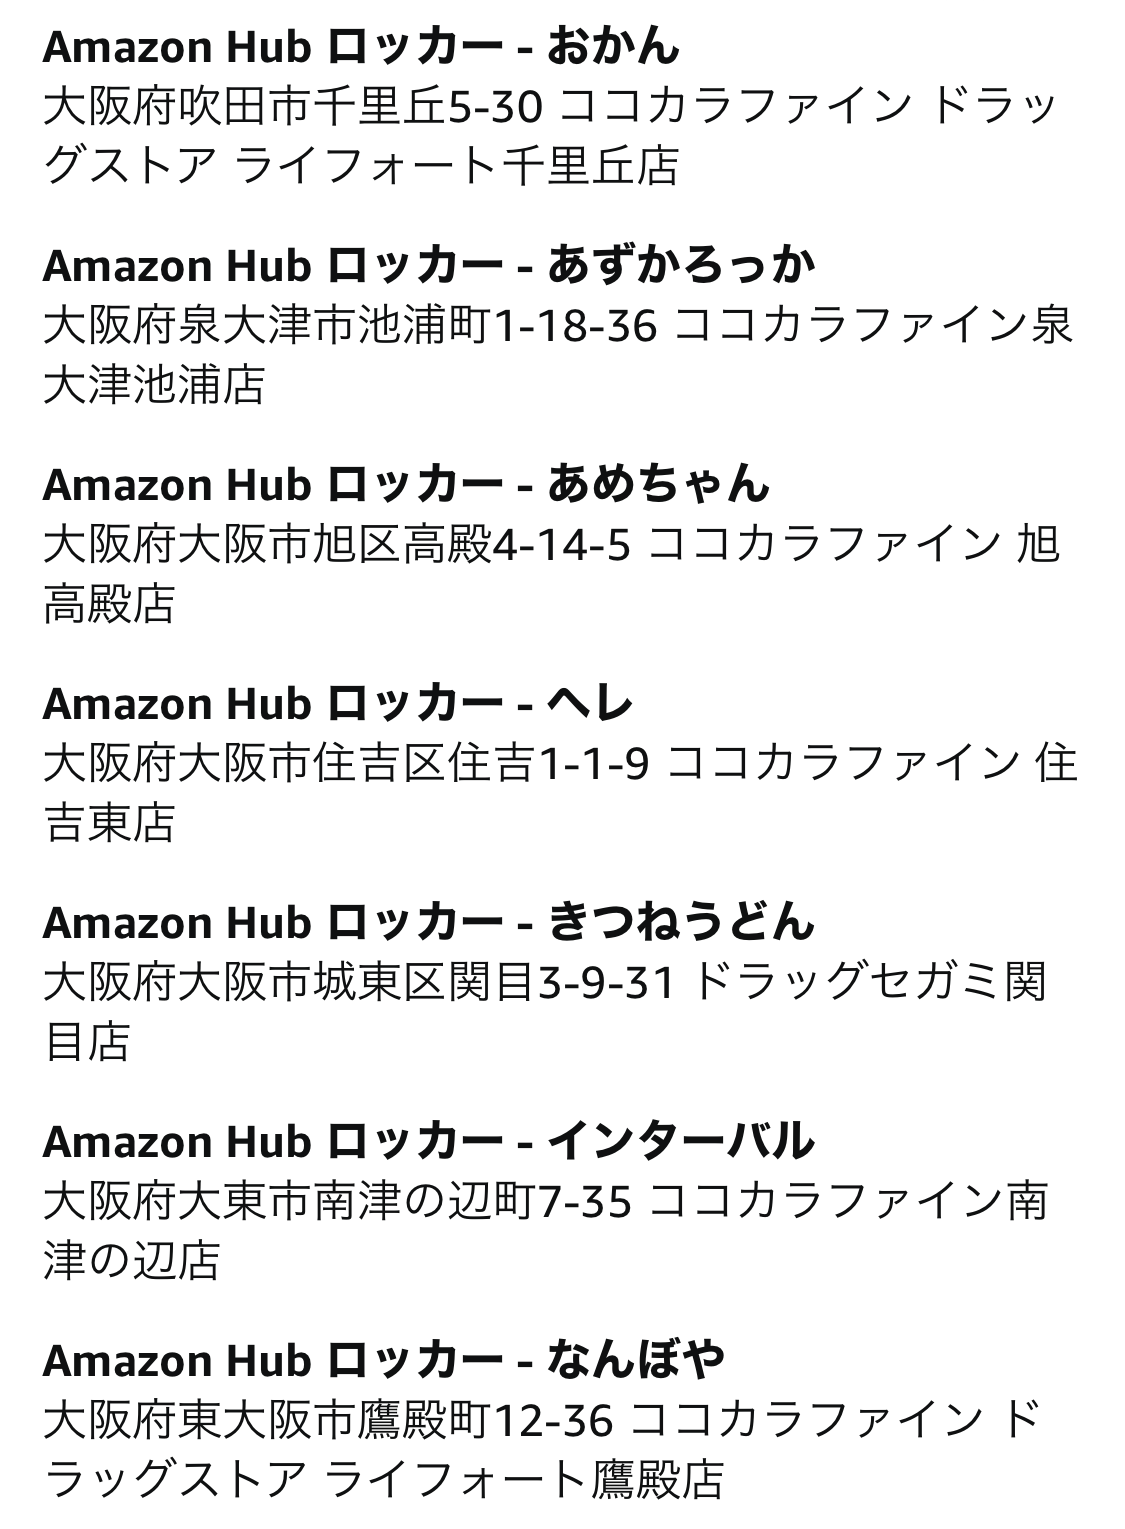 AmazonLocker AmazonHub 05